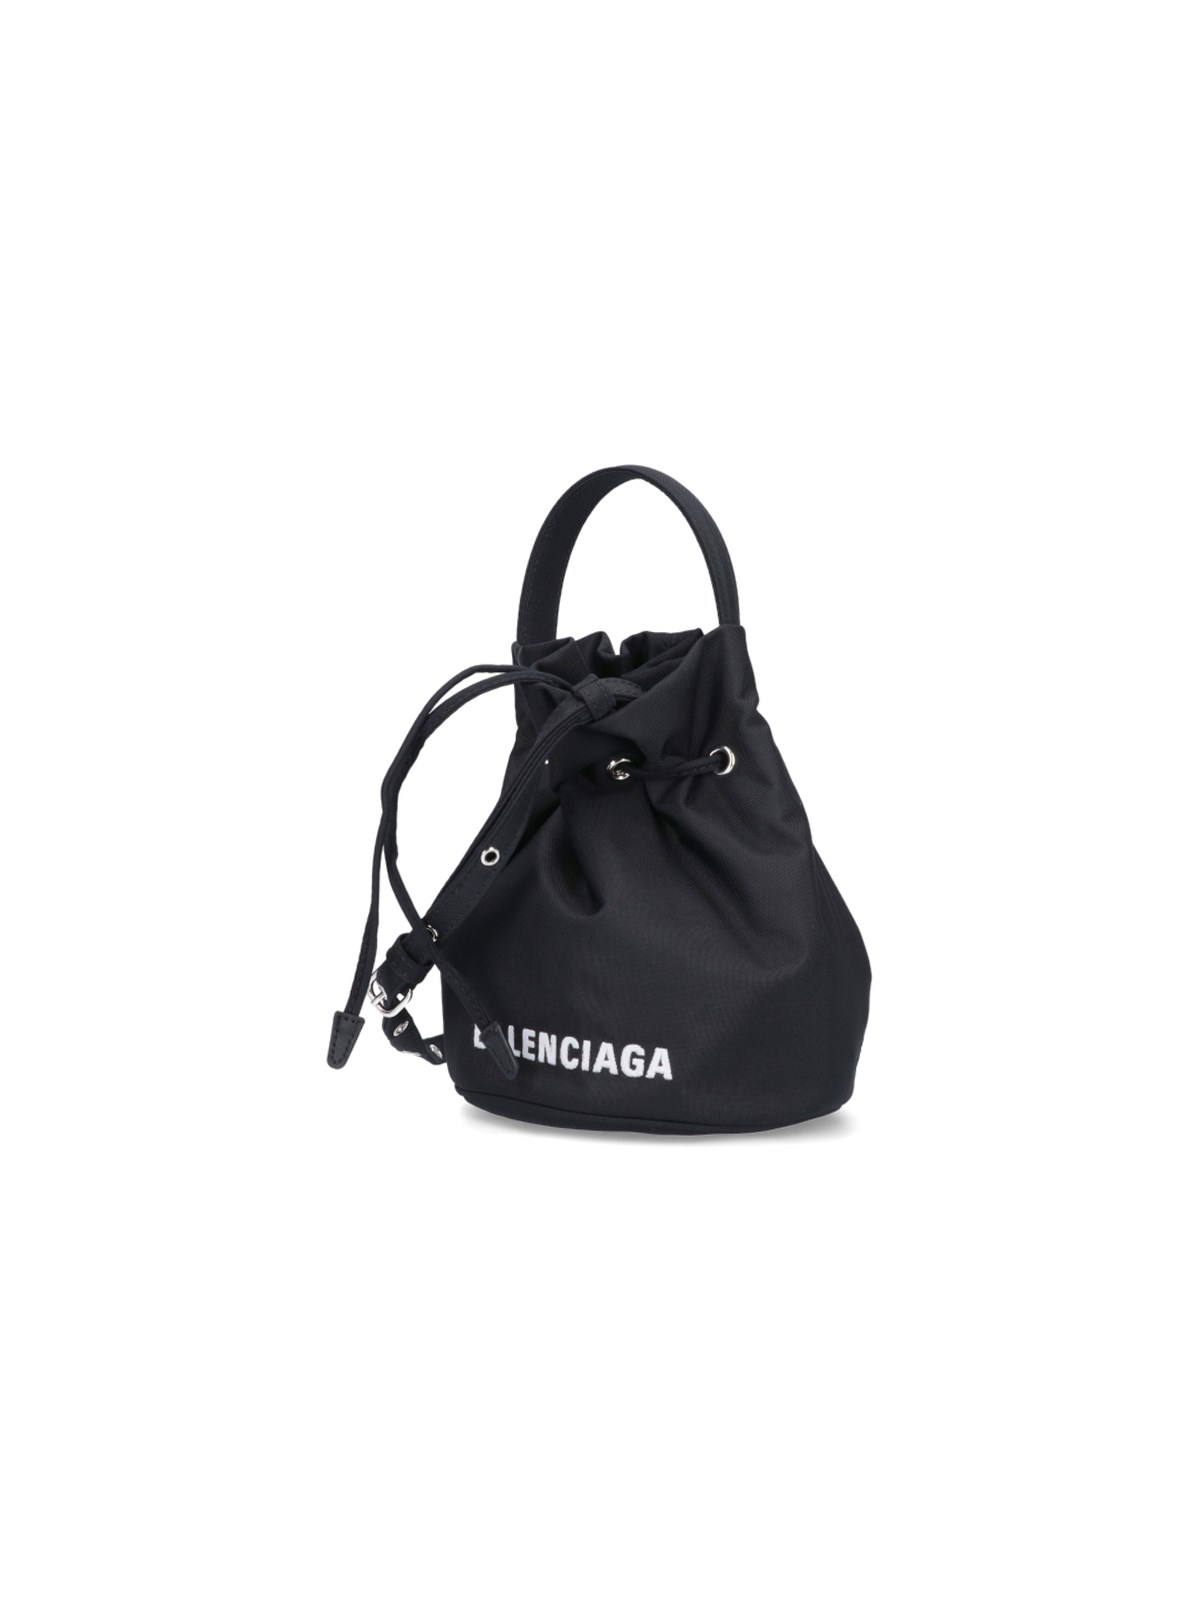 Balenciaga Wheel Xs Drawstring Bucket Bag